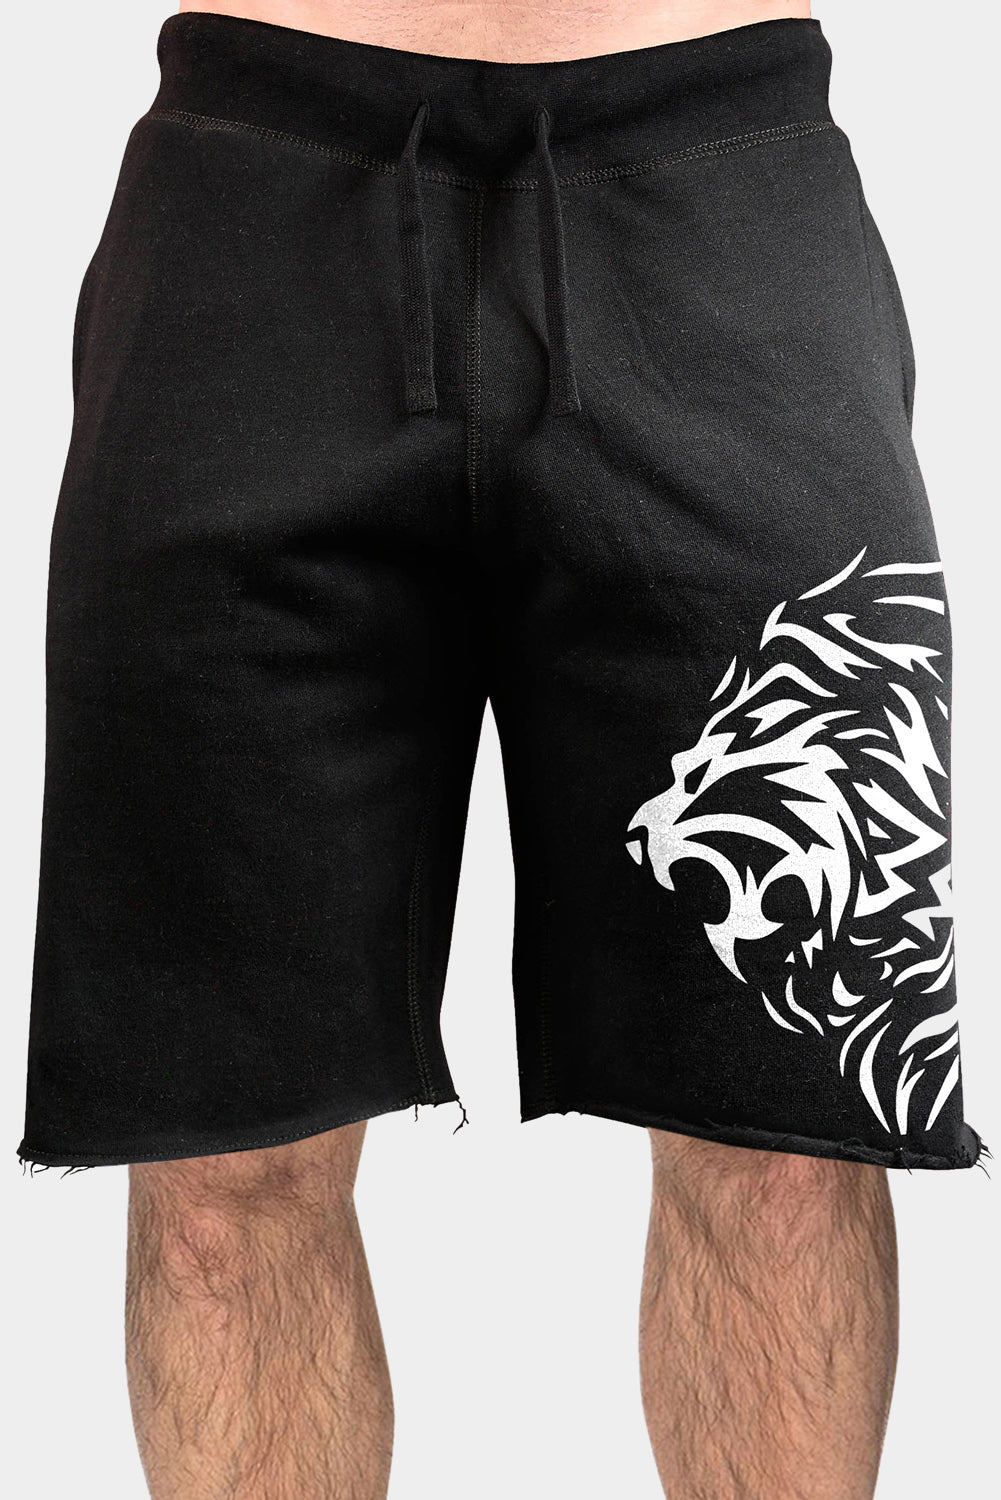 Black Animal Print Drawstring High Waist Men's Casual Shorts Black 55%Viscose+45%Polyester Men's Pants JT's Designer Fashion